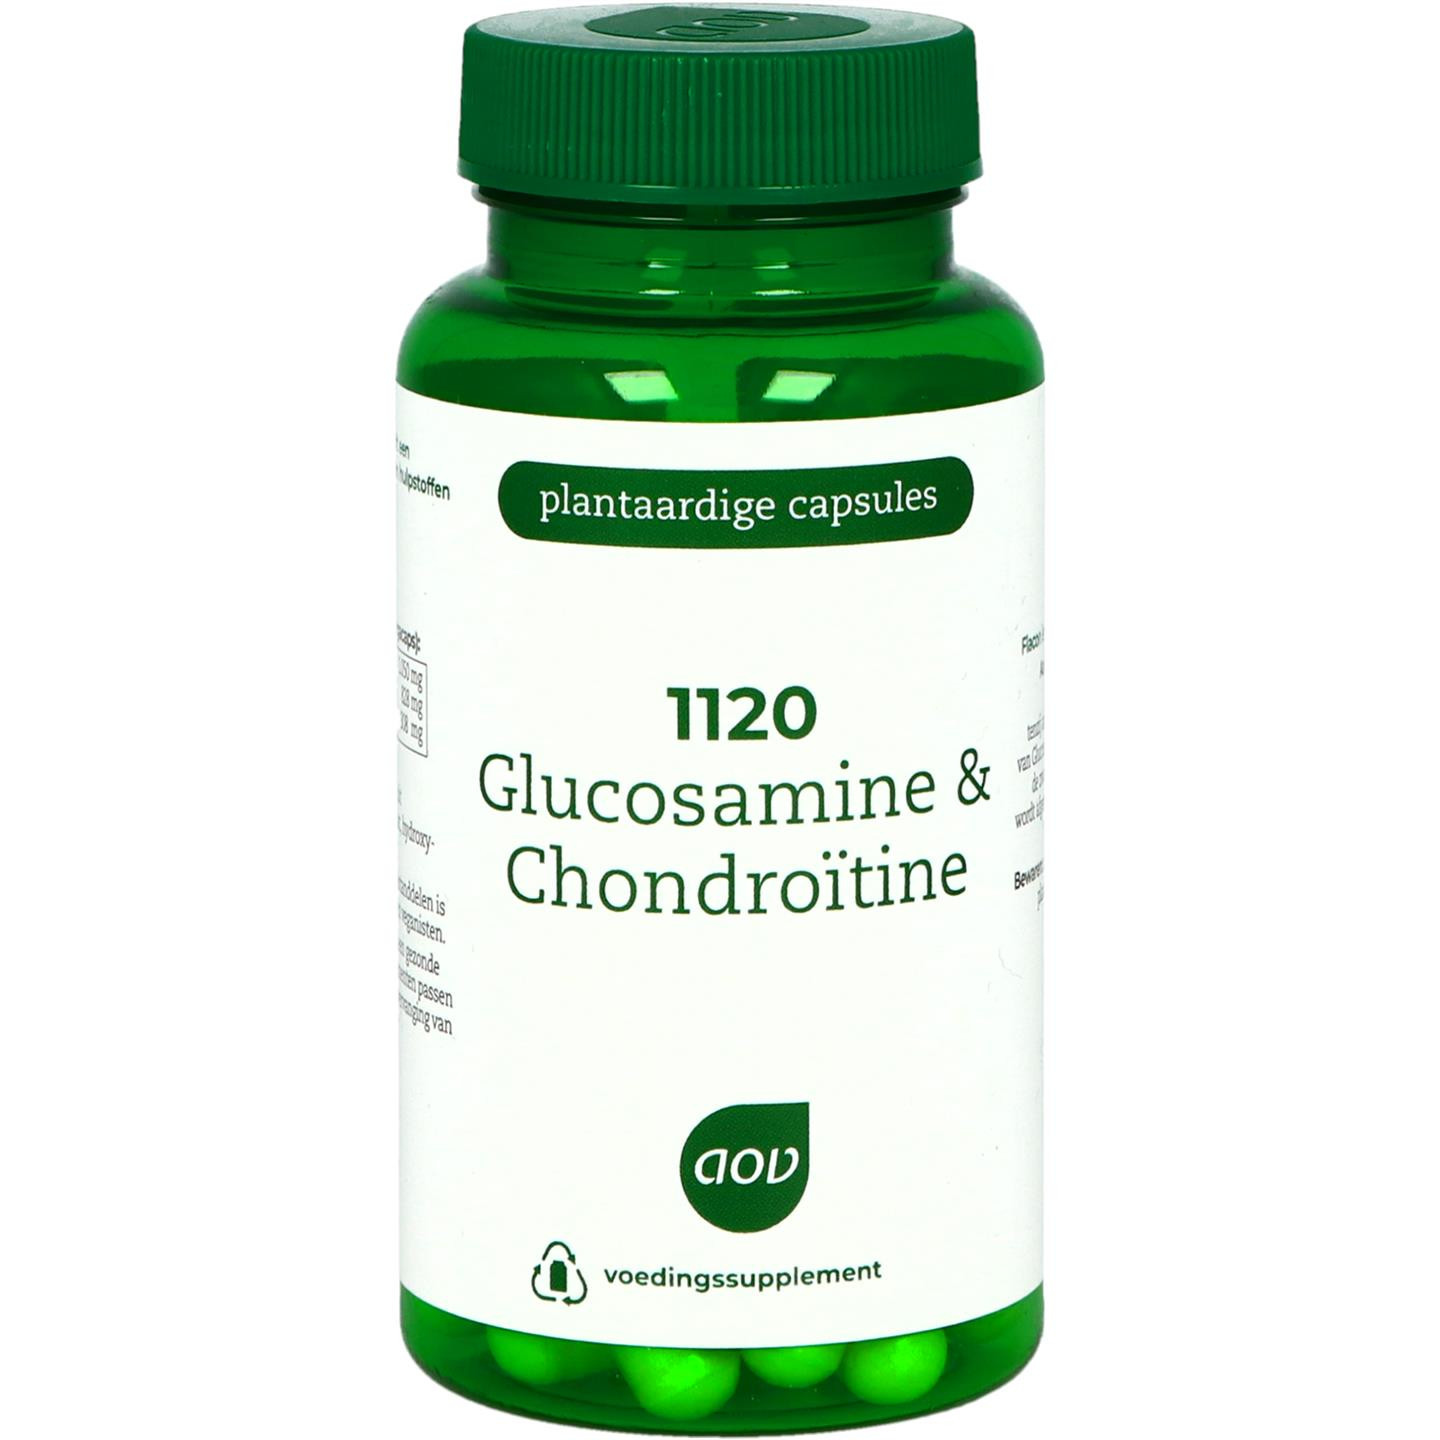 1120 Glucosamine & Chondroïtine